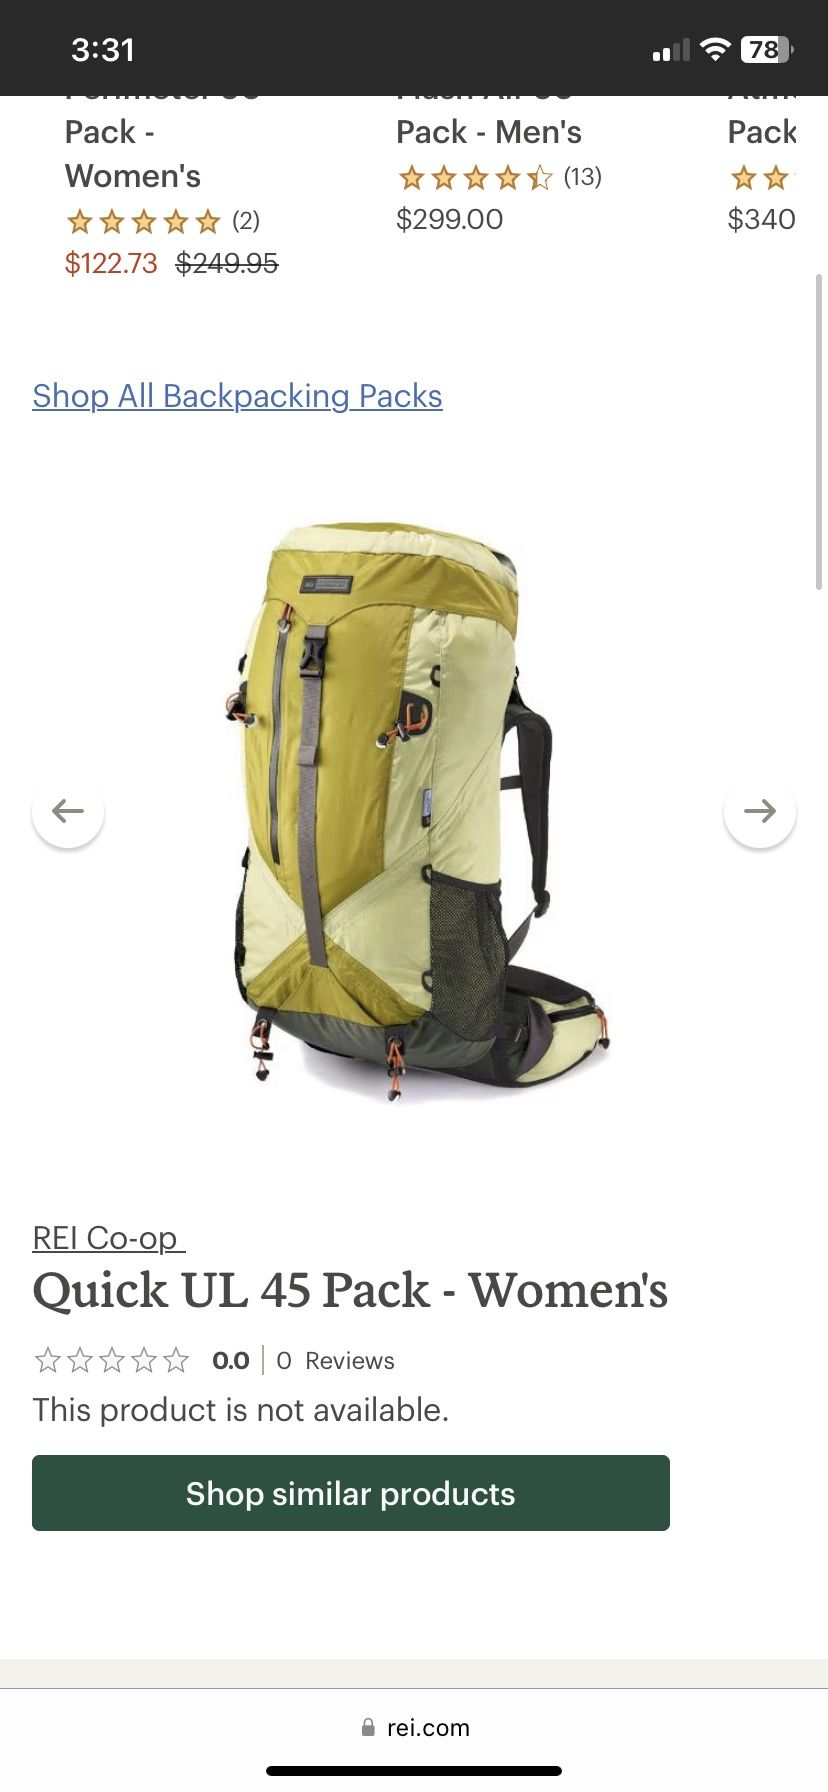 REI quick UL 45 pack